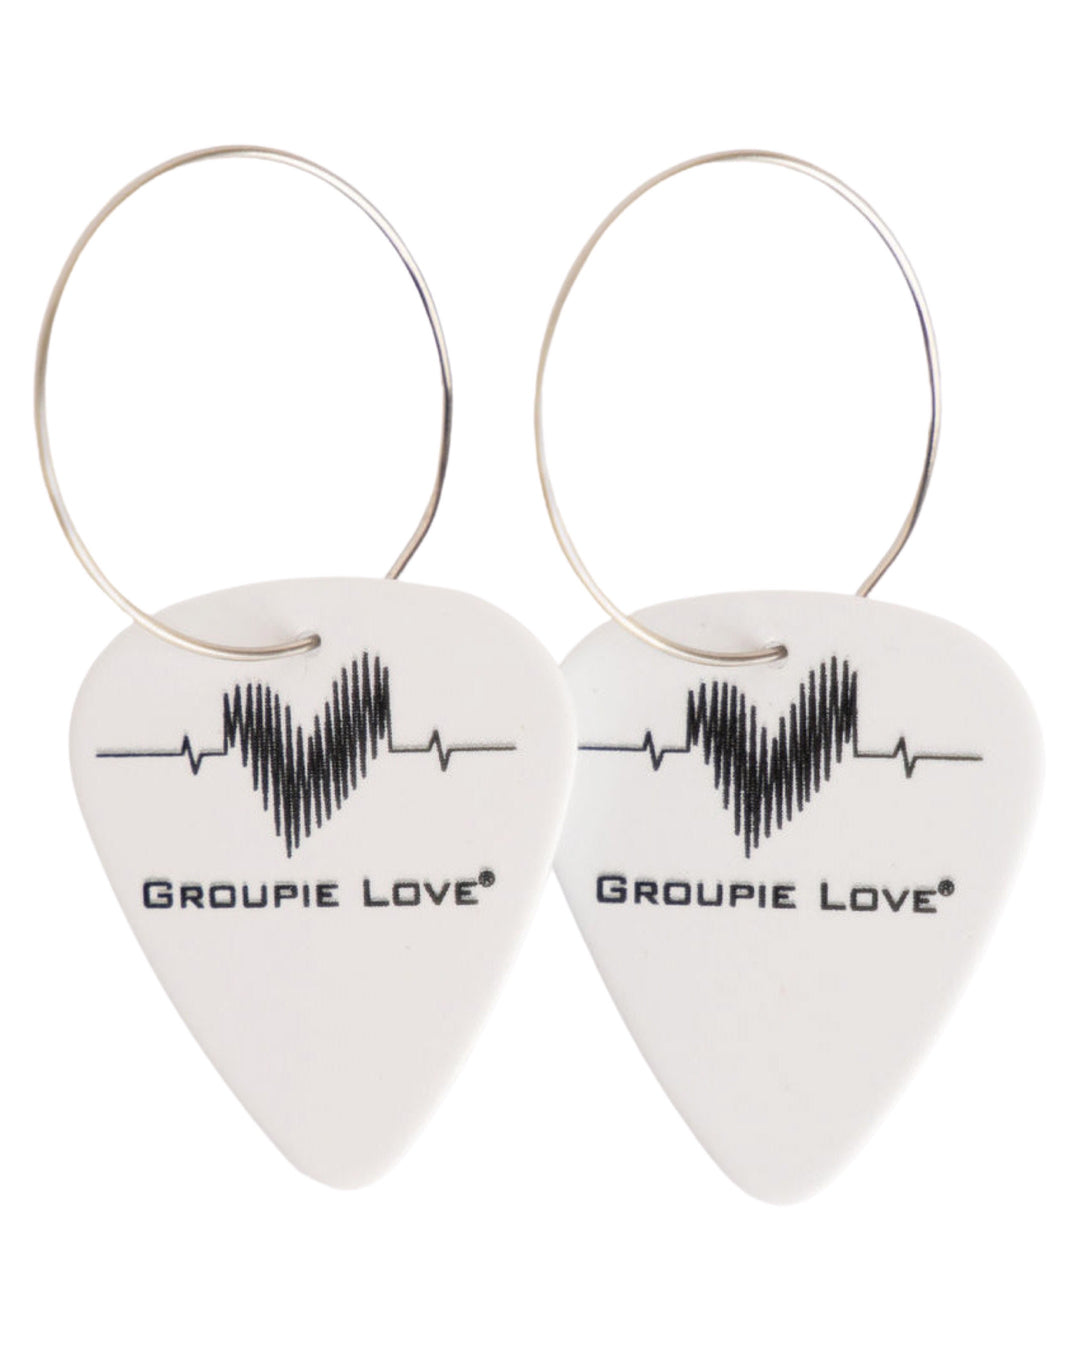 Groupie Love Classic Single Guitar Pick Earrings